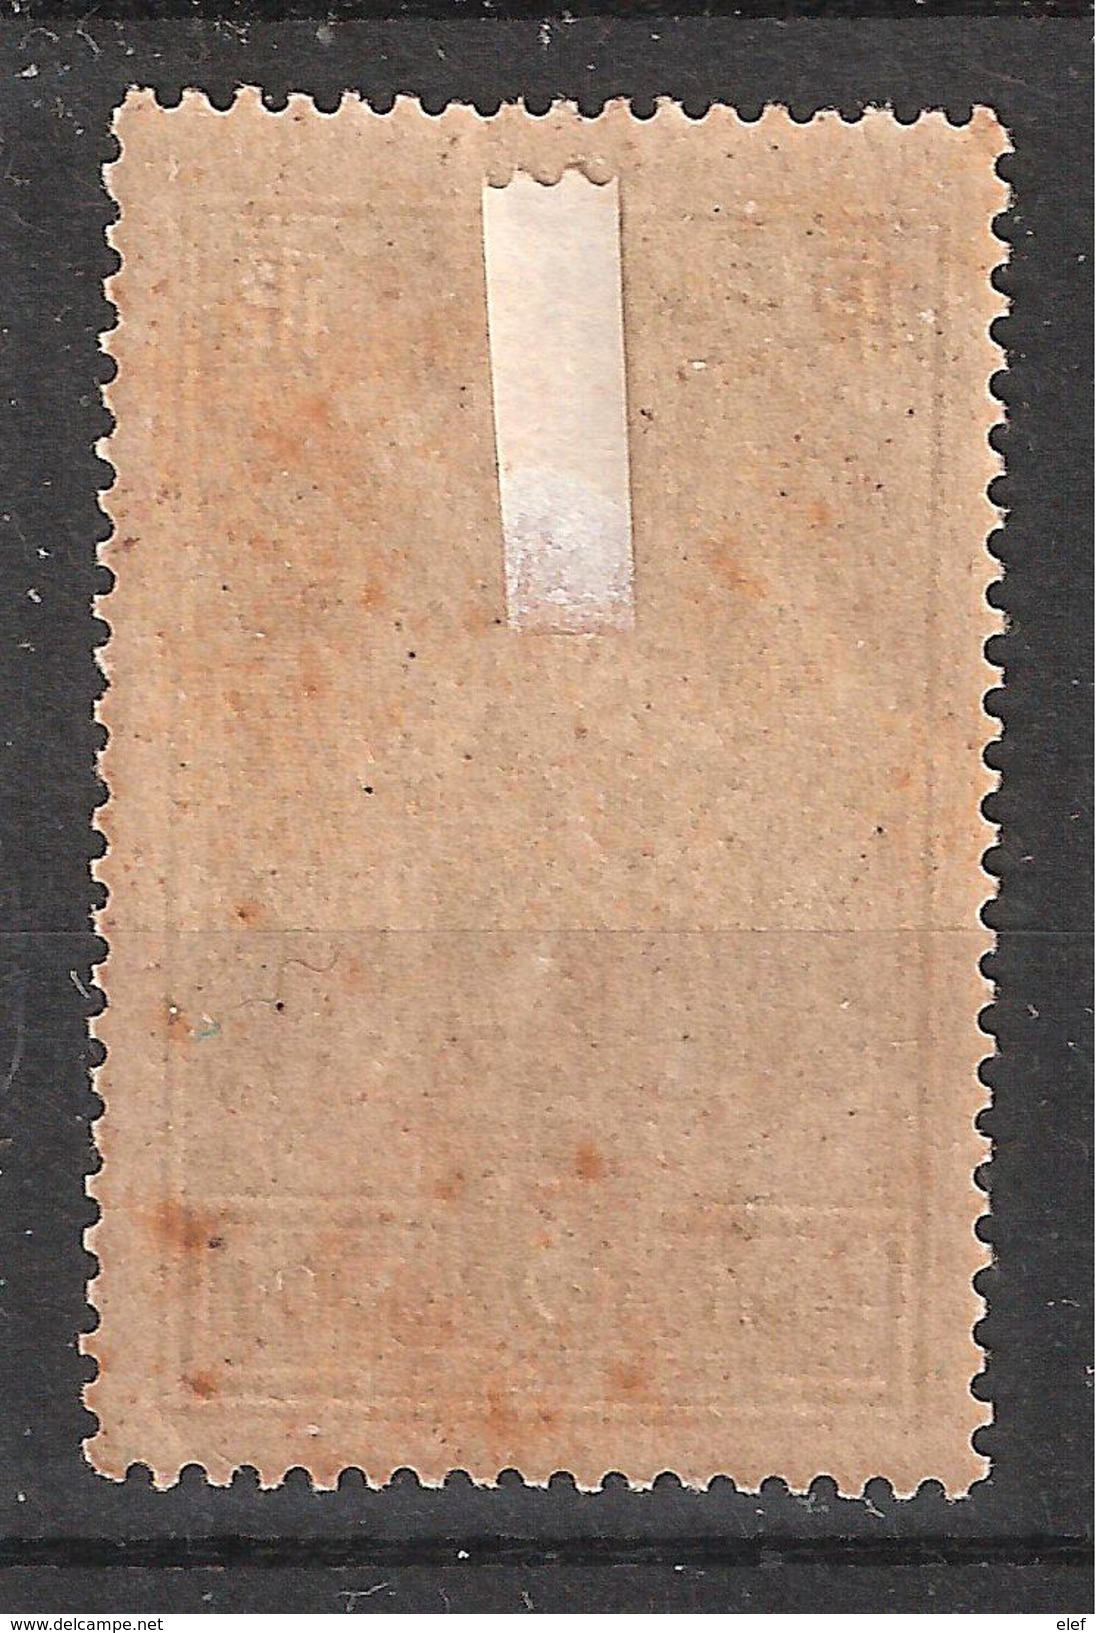 France, 1929, Cathédrale De Reims ,Yvert N ° 259 B, Type III , Neuf * / MH , Cote 460 Euros , RARE !!!!! - Unused Stamps